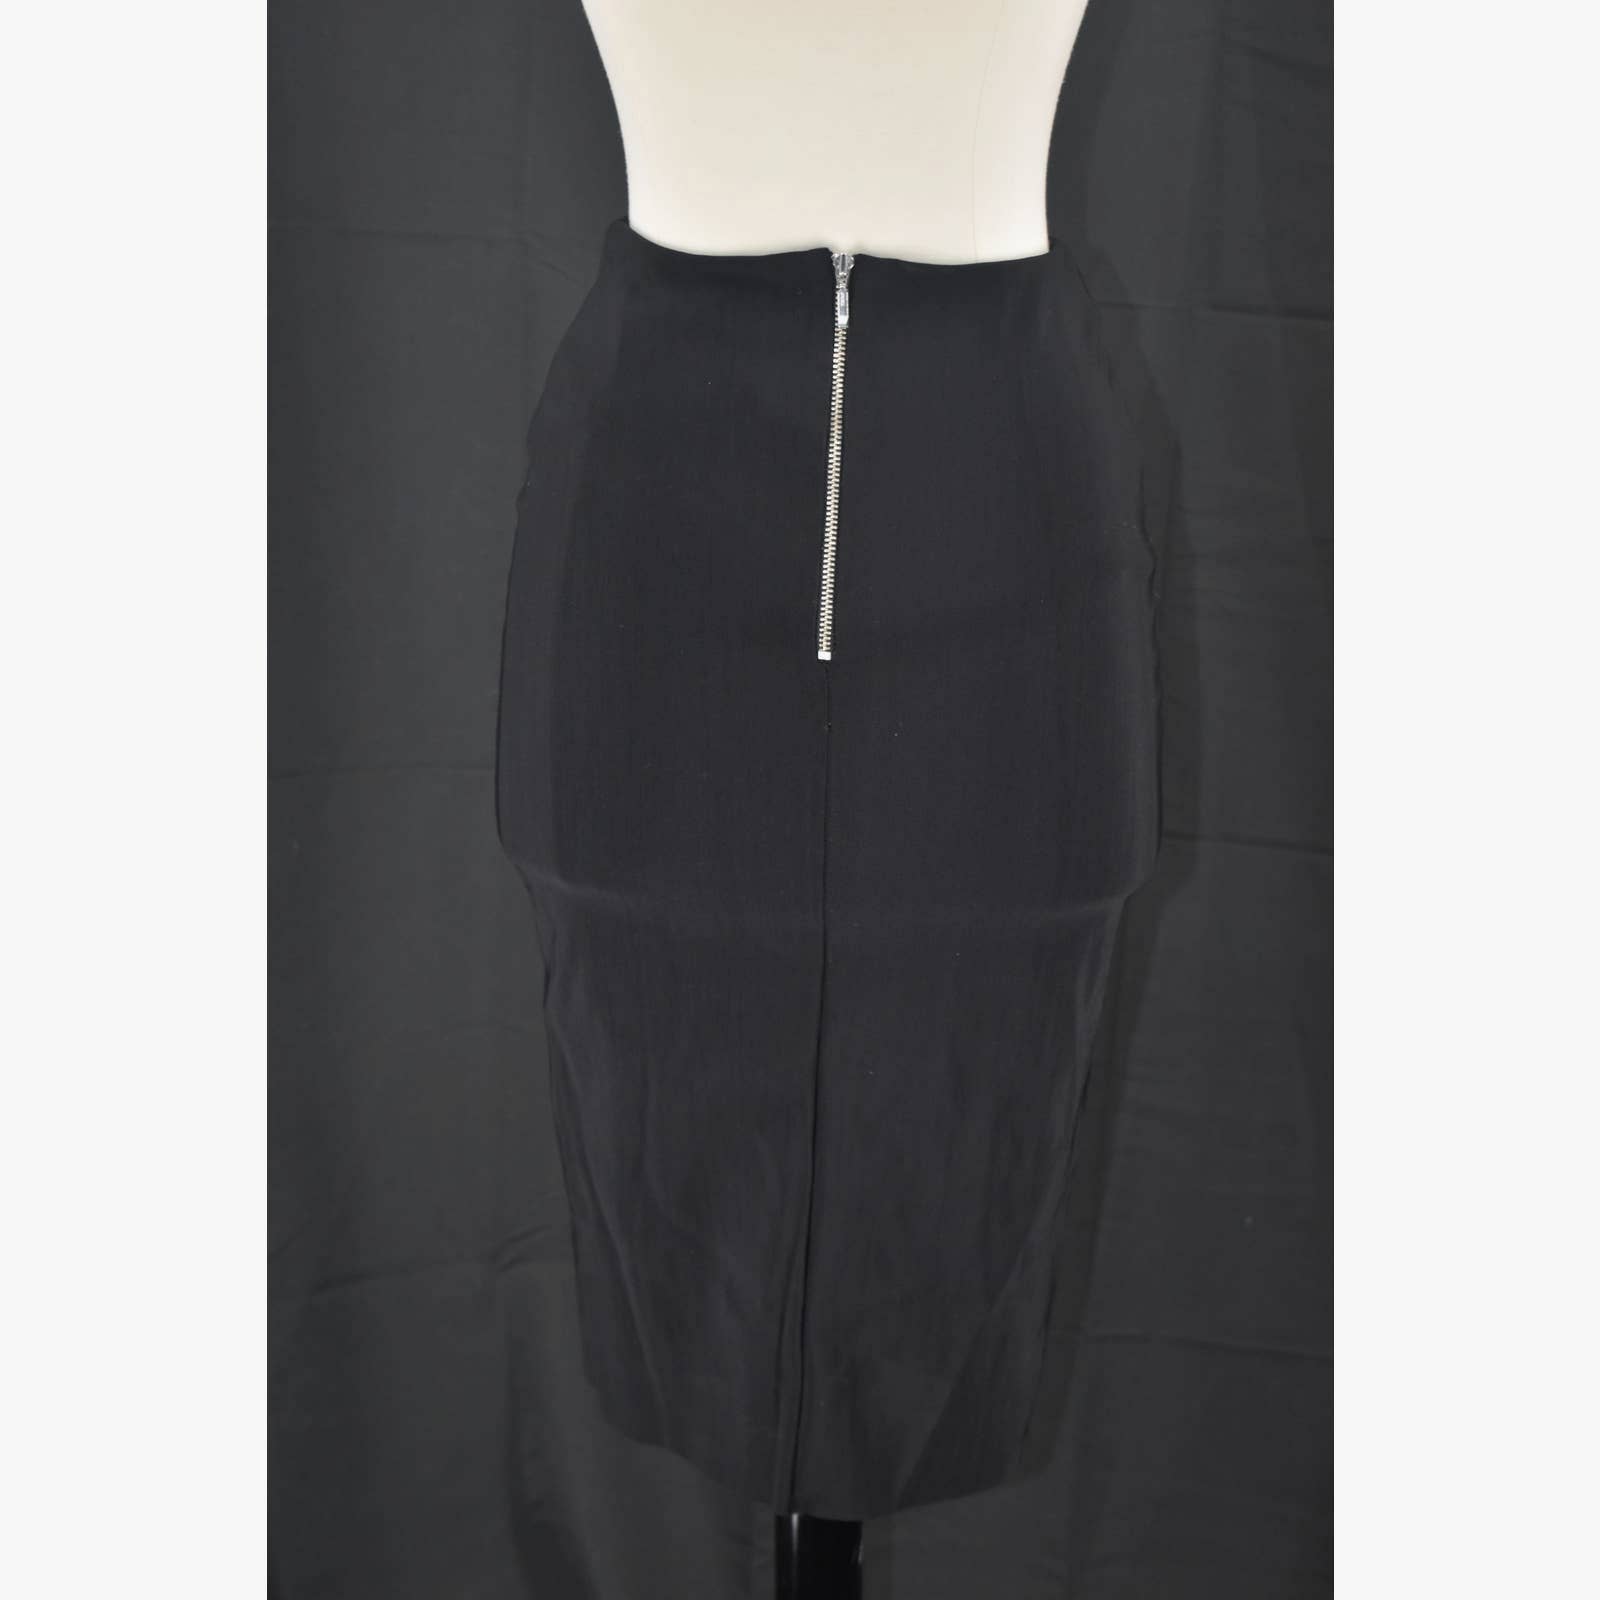 NWT Bec & Bridge Black Lined Grommet A-Line Skirt - 4